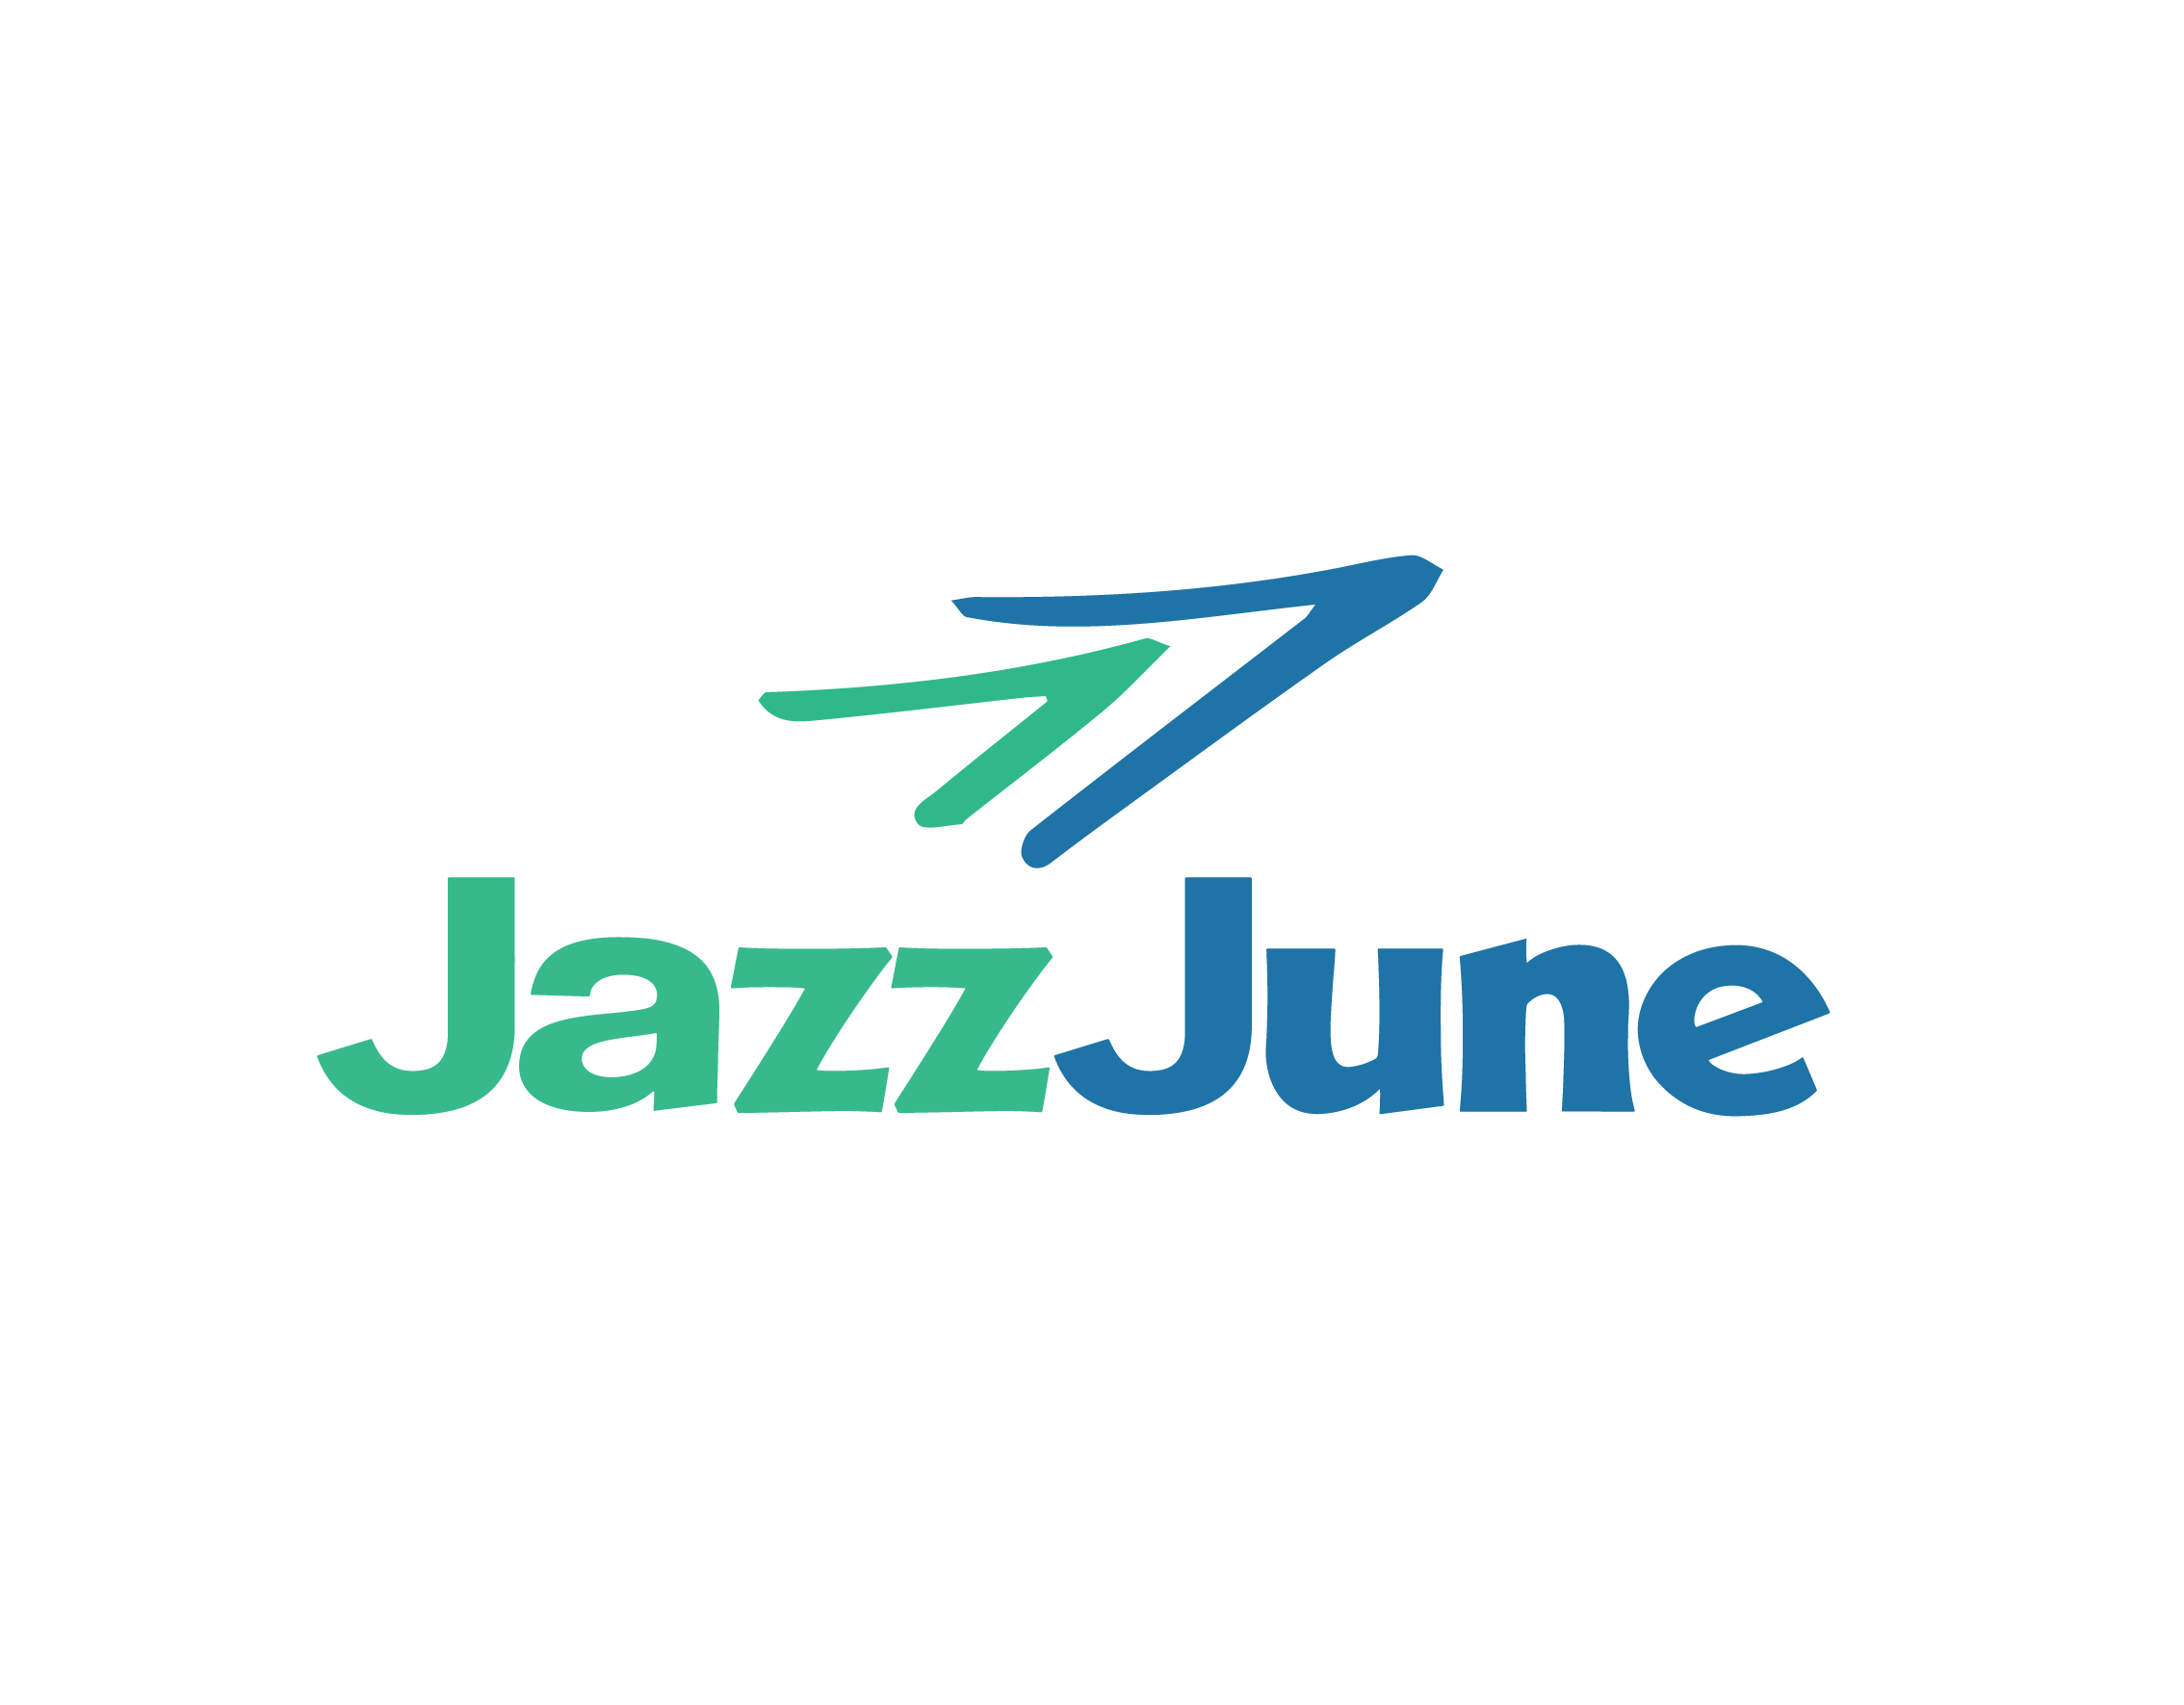 A Simple and Affordable Platform - JazzJune